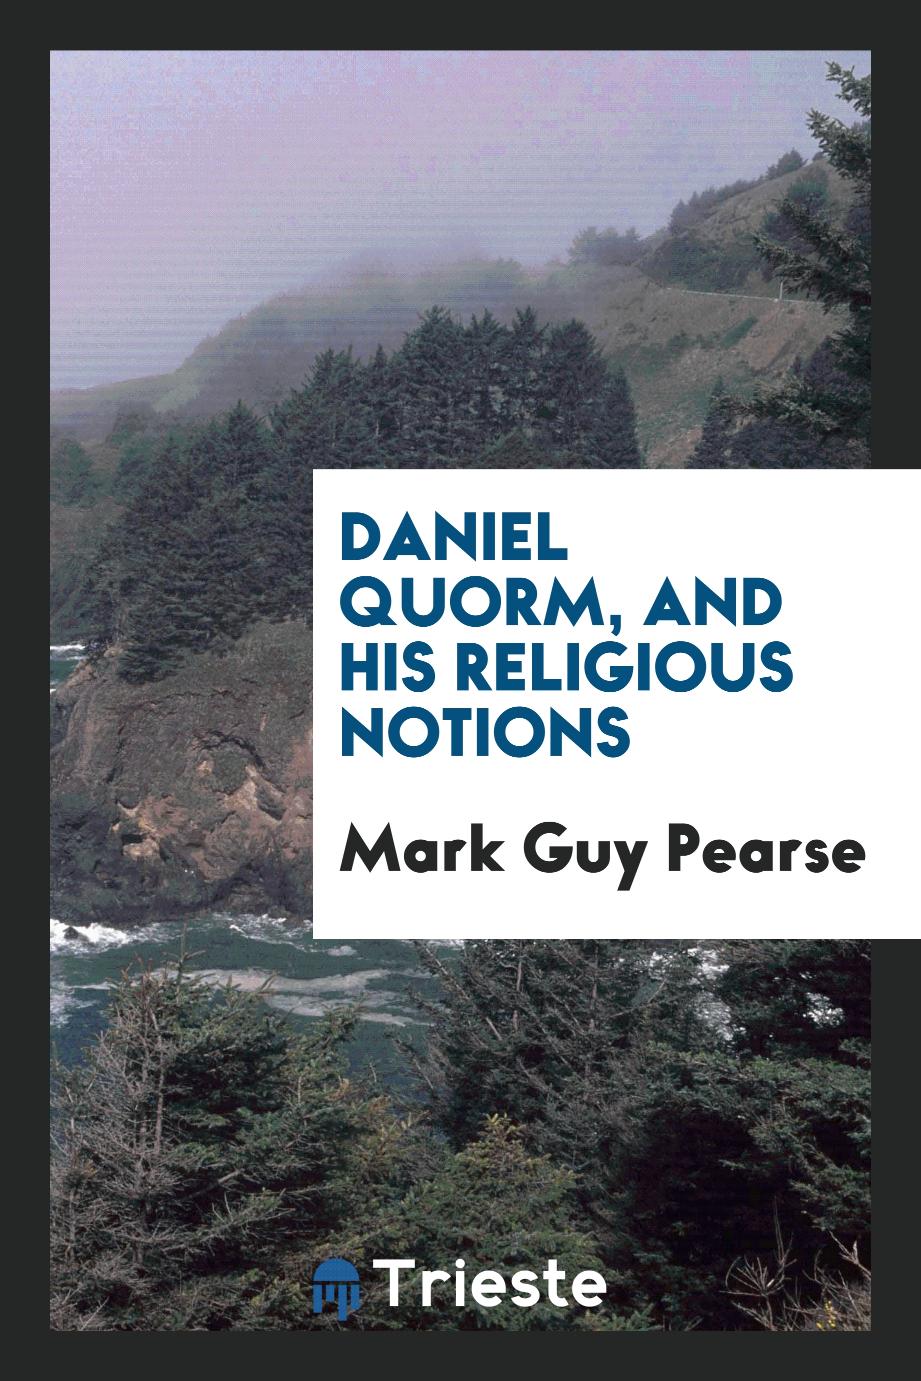 Daniel Quorm, and his religious notions